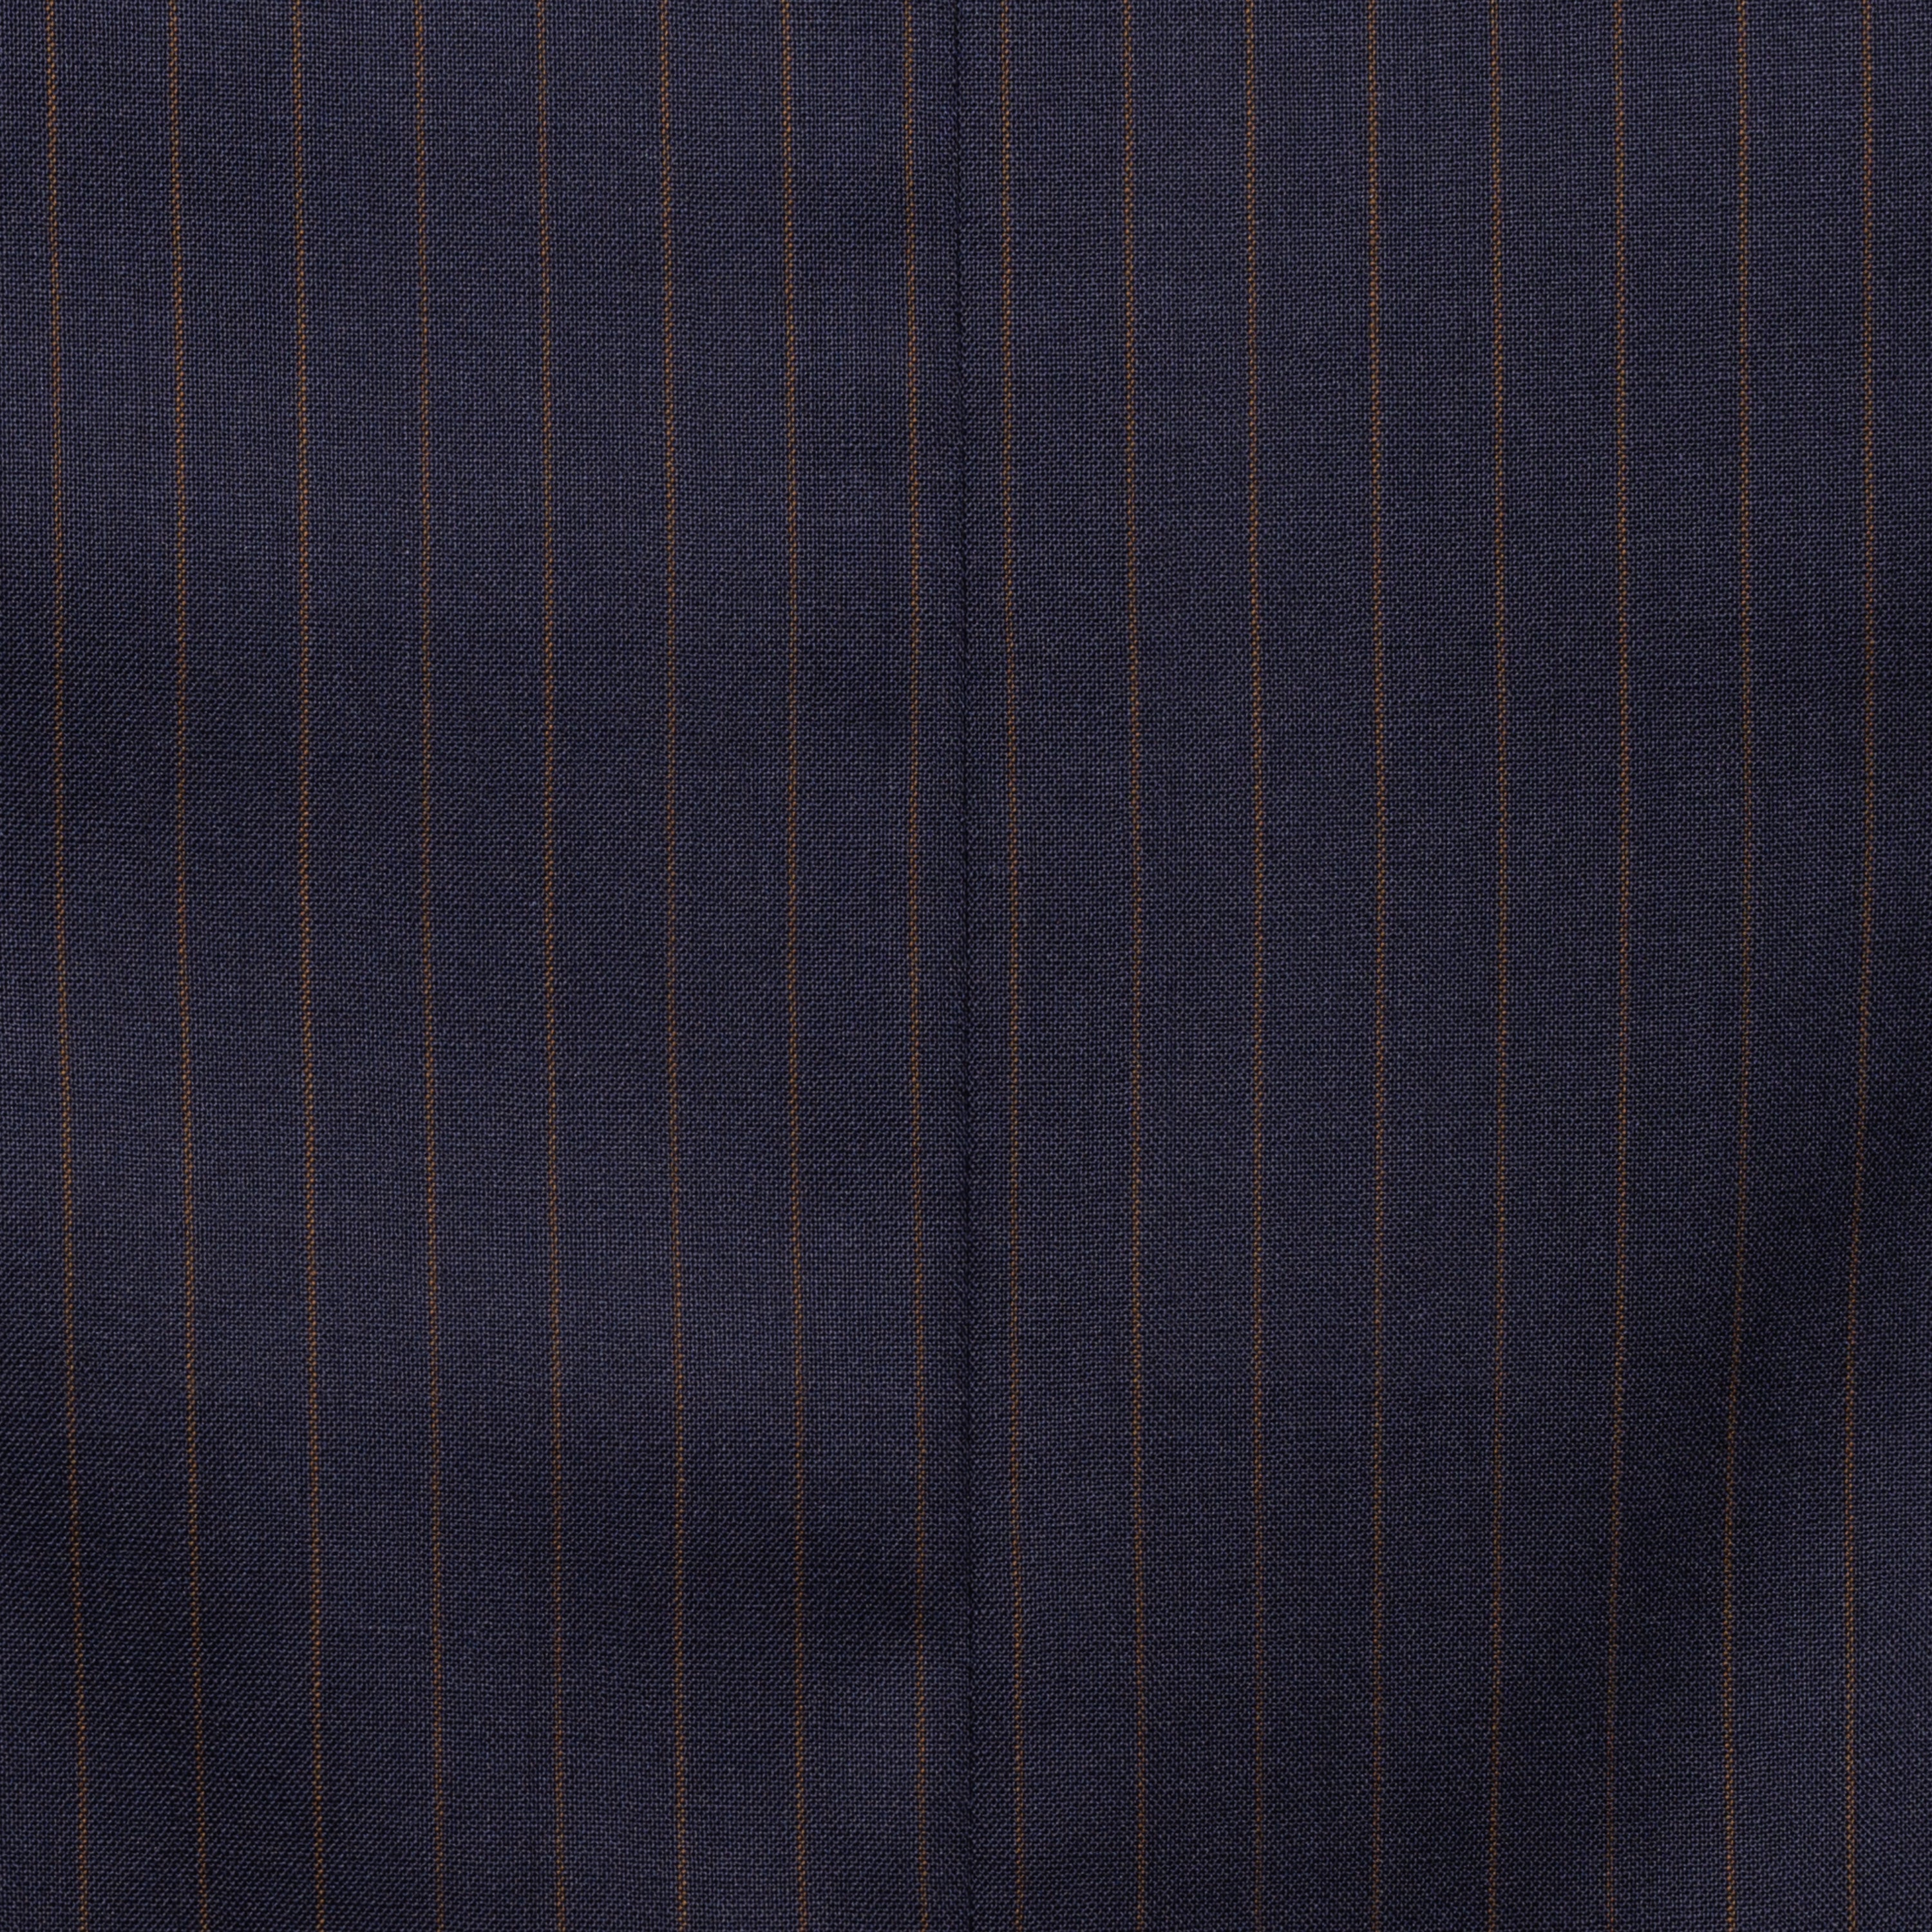 SARTORIA CASTANGIA Navy Blue Striped Mohair-Wool Super 100's Suit NEW CASTANGIA